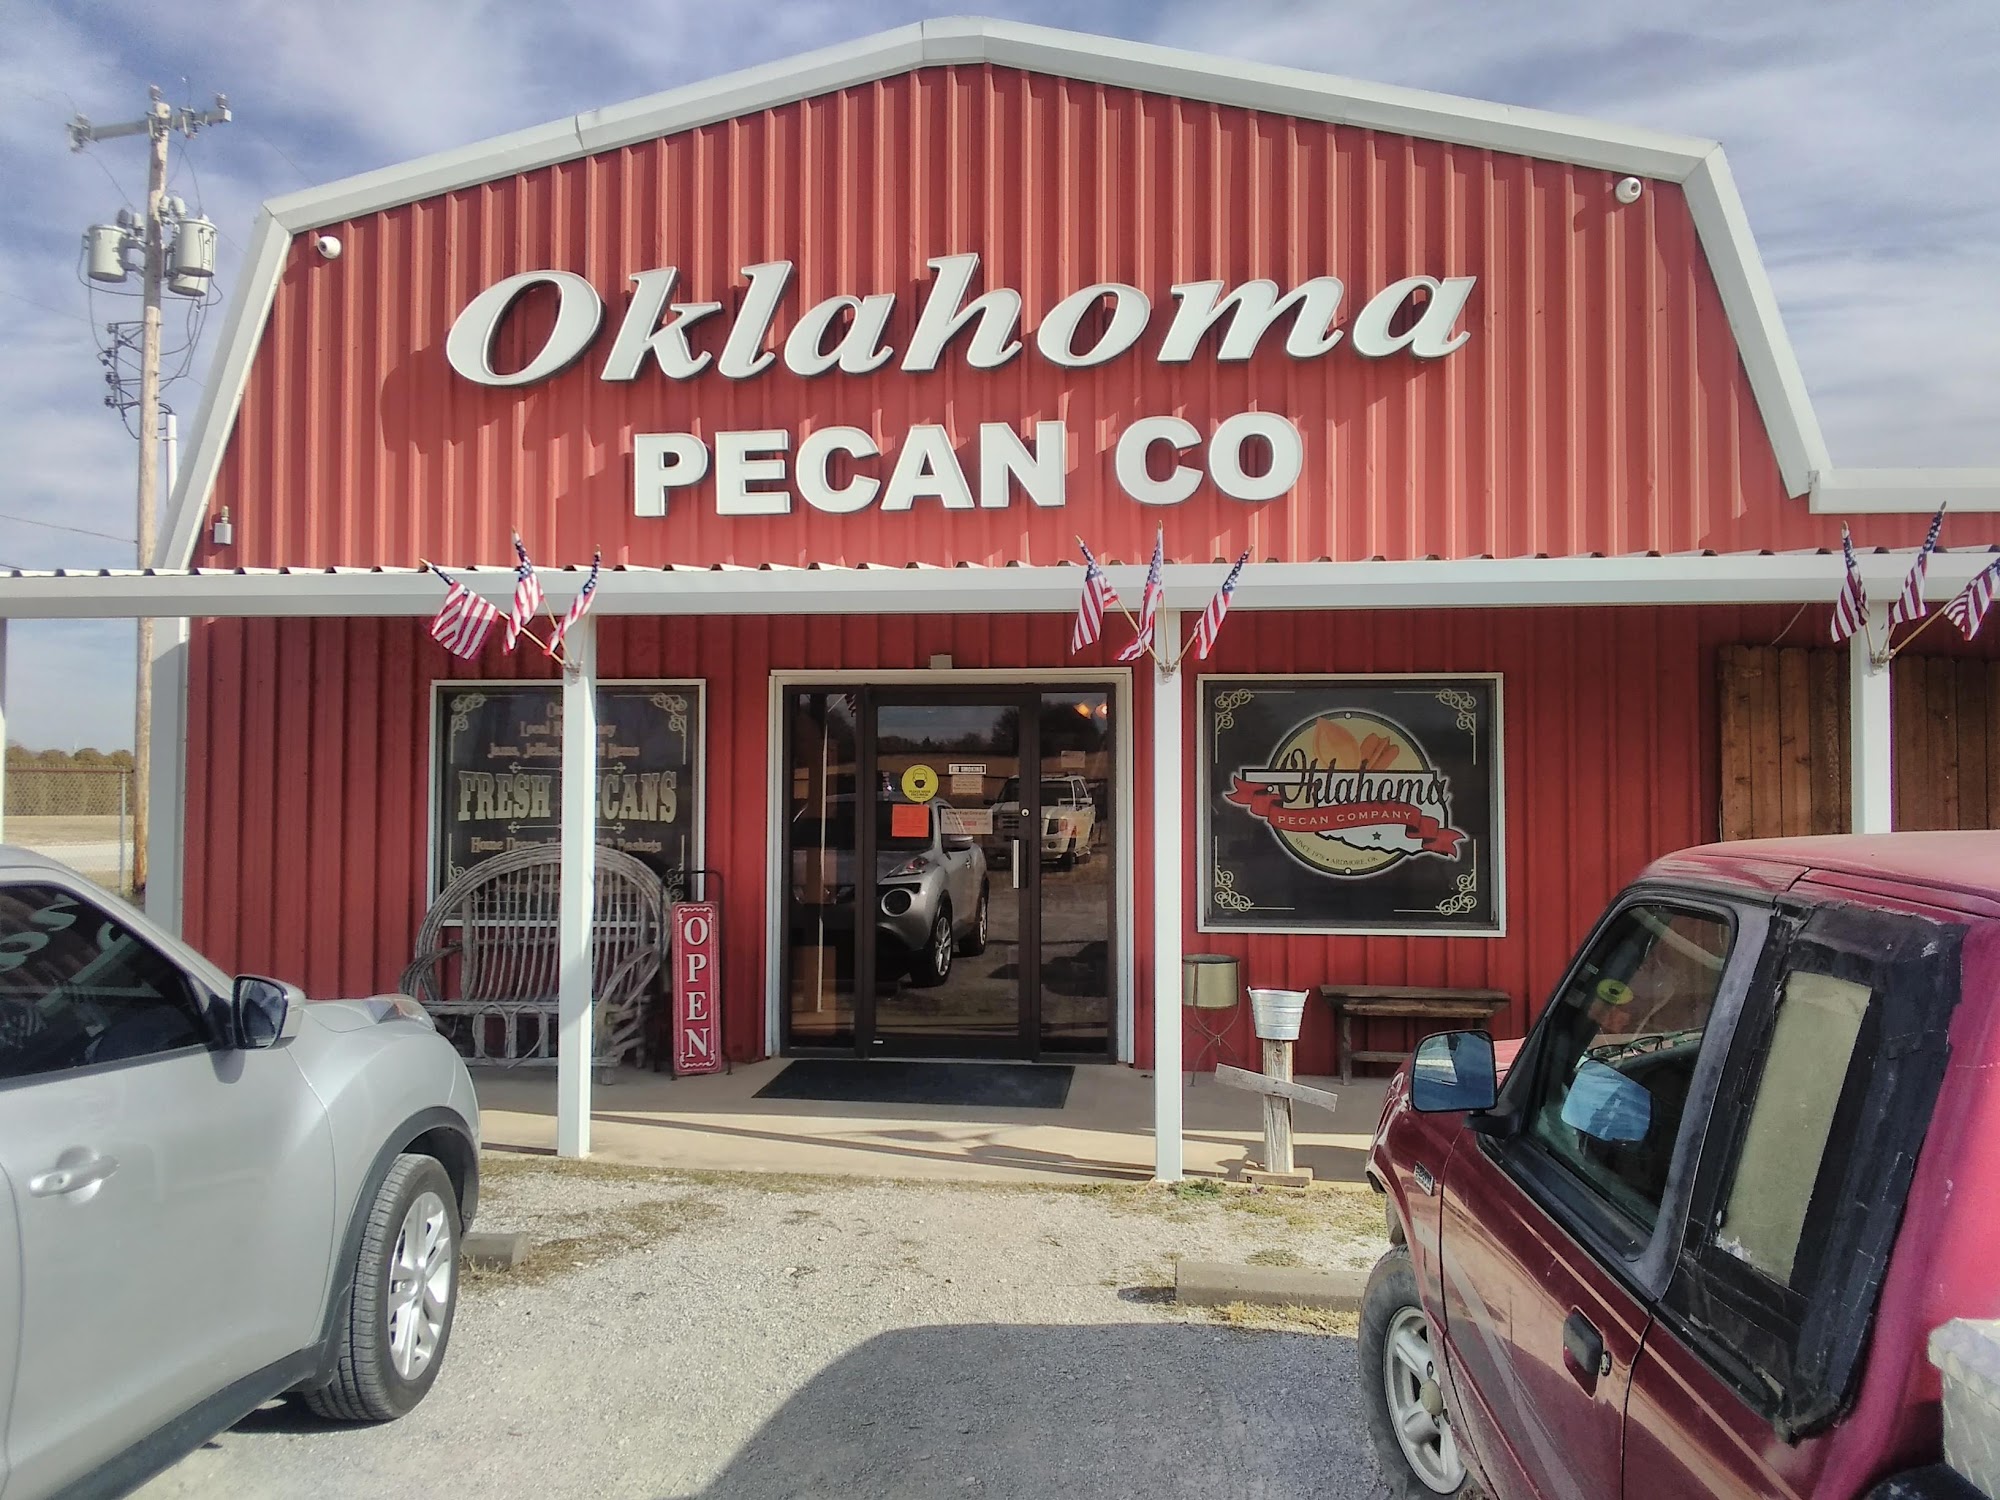 Oklahoma Pecan Co